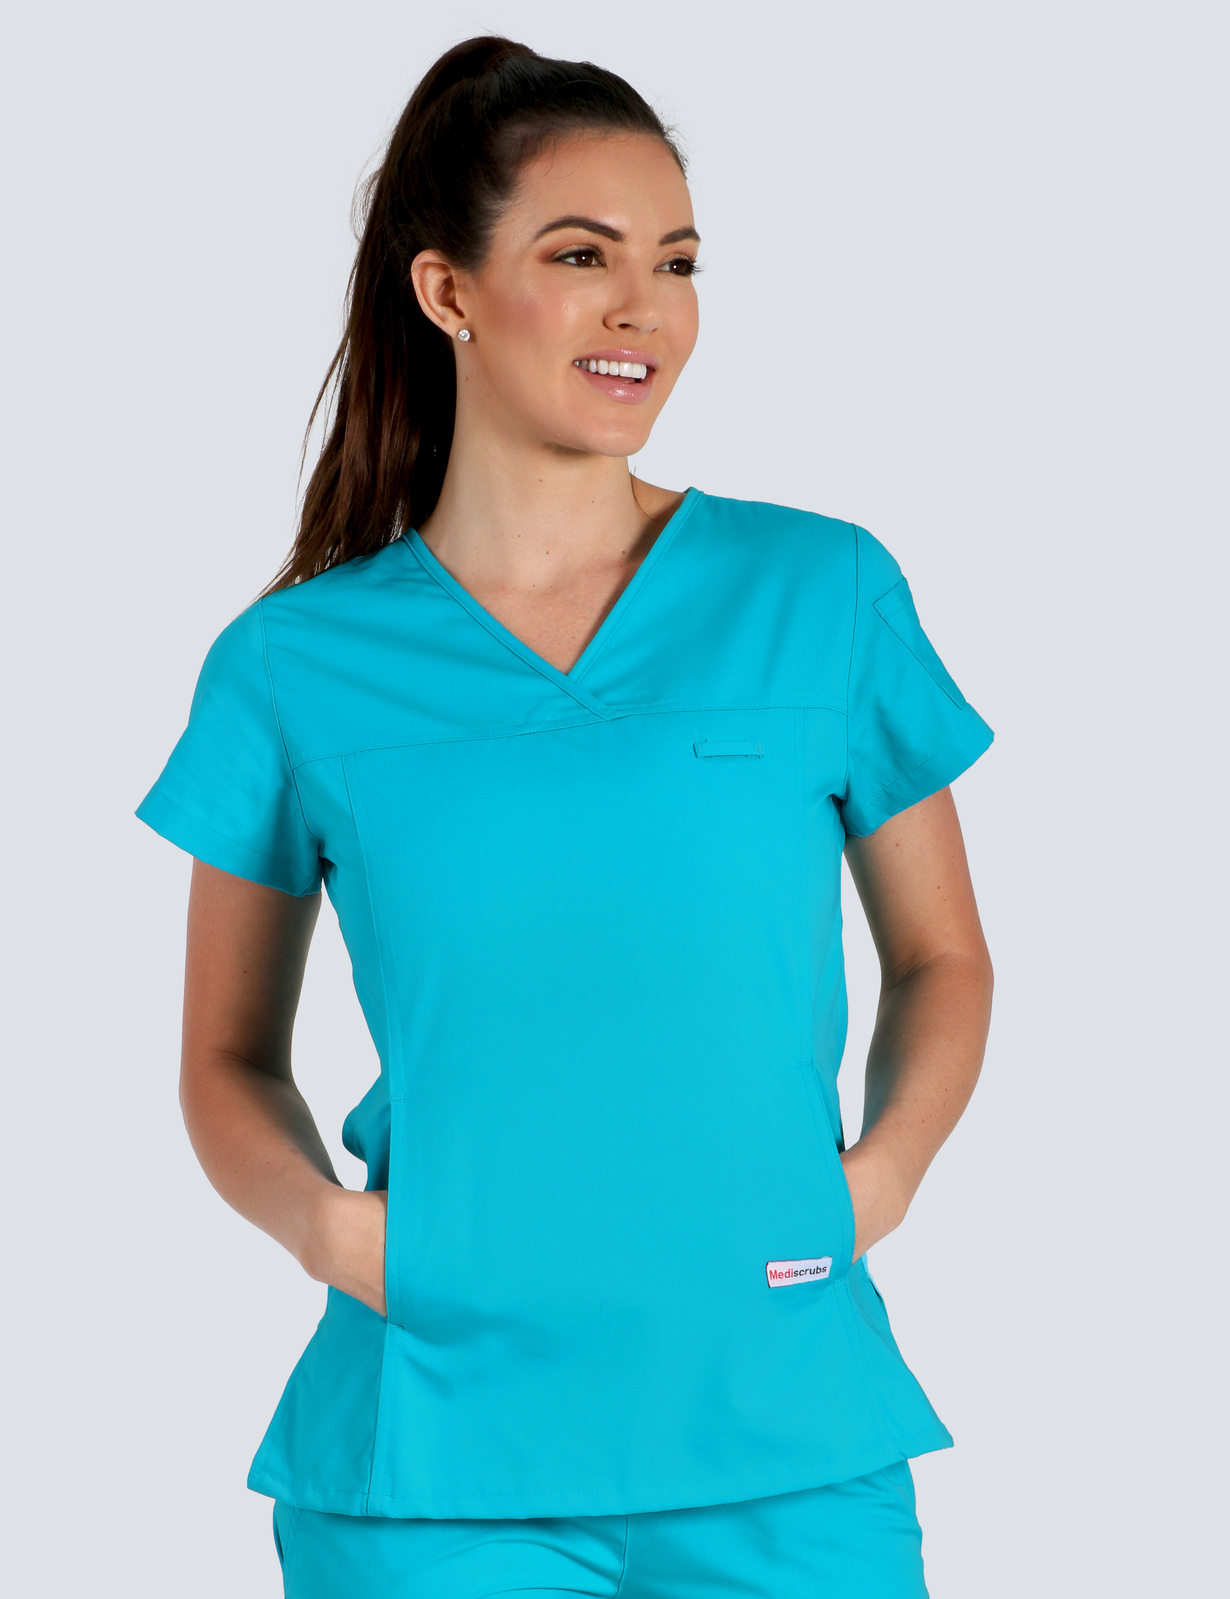 Queensland Children's Hospital Emergency Department Clinical Nurse  Uniform Top Bundle  (Women's Fit Top in Navy  incl Logos)